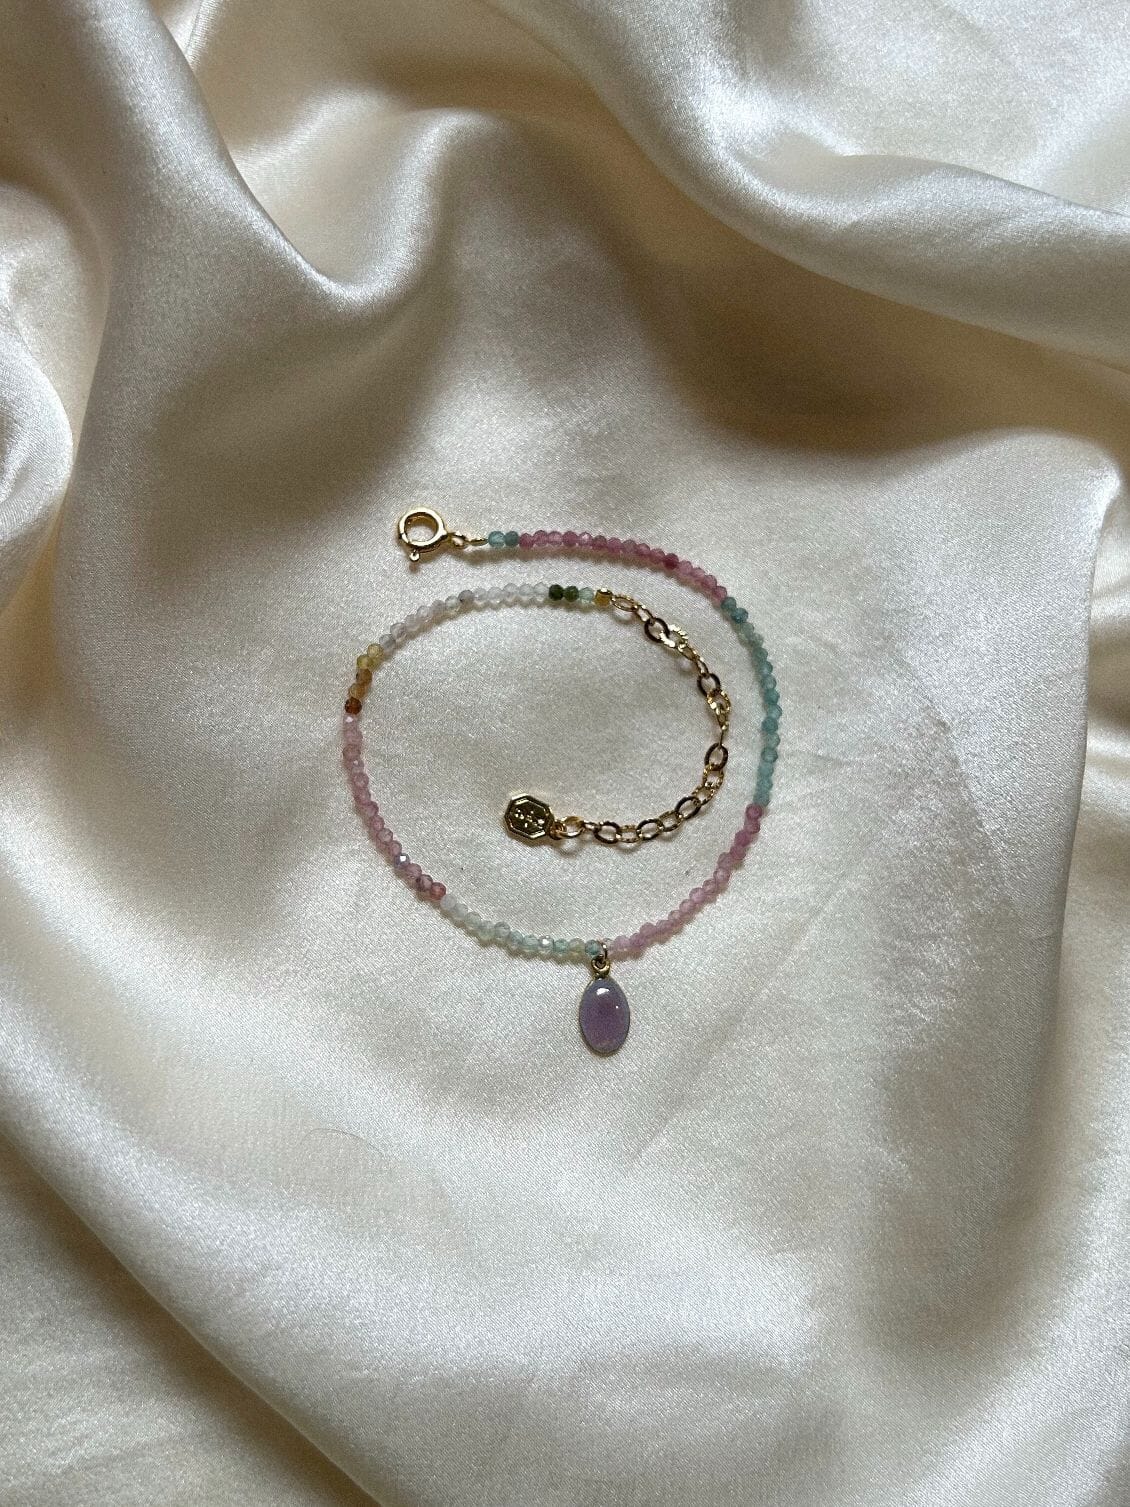 #bracelet #perles #coloré #summer #été #cute #pretty #bali #bijoux #jewellery #jelwery #indispensable #féminin #soft 